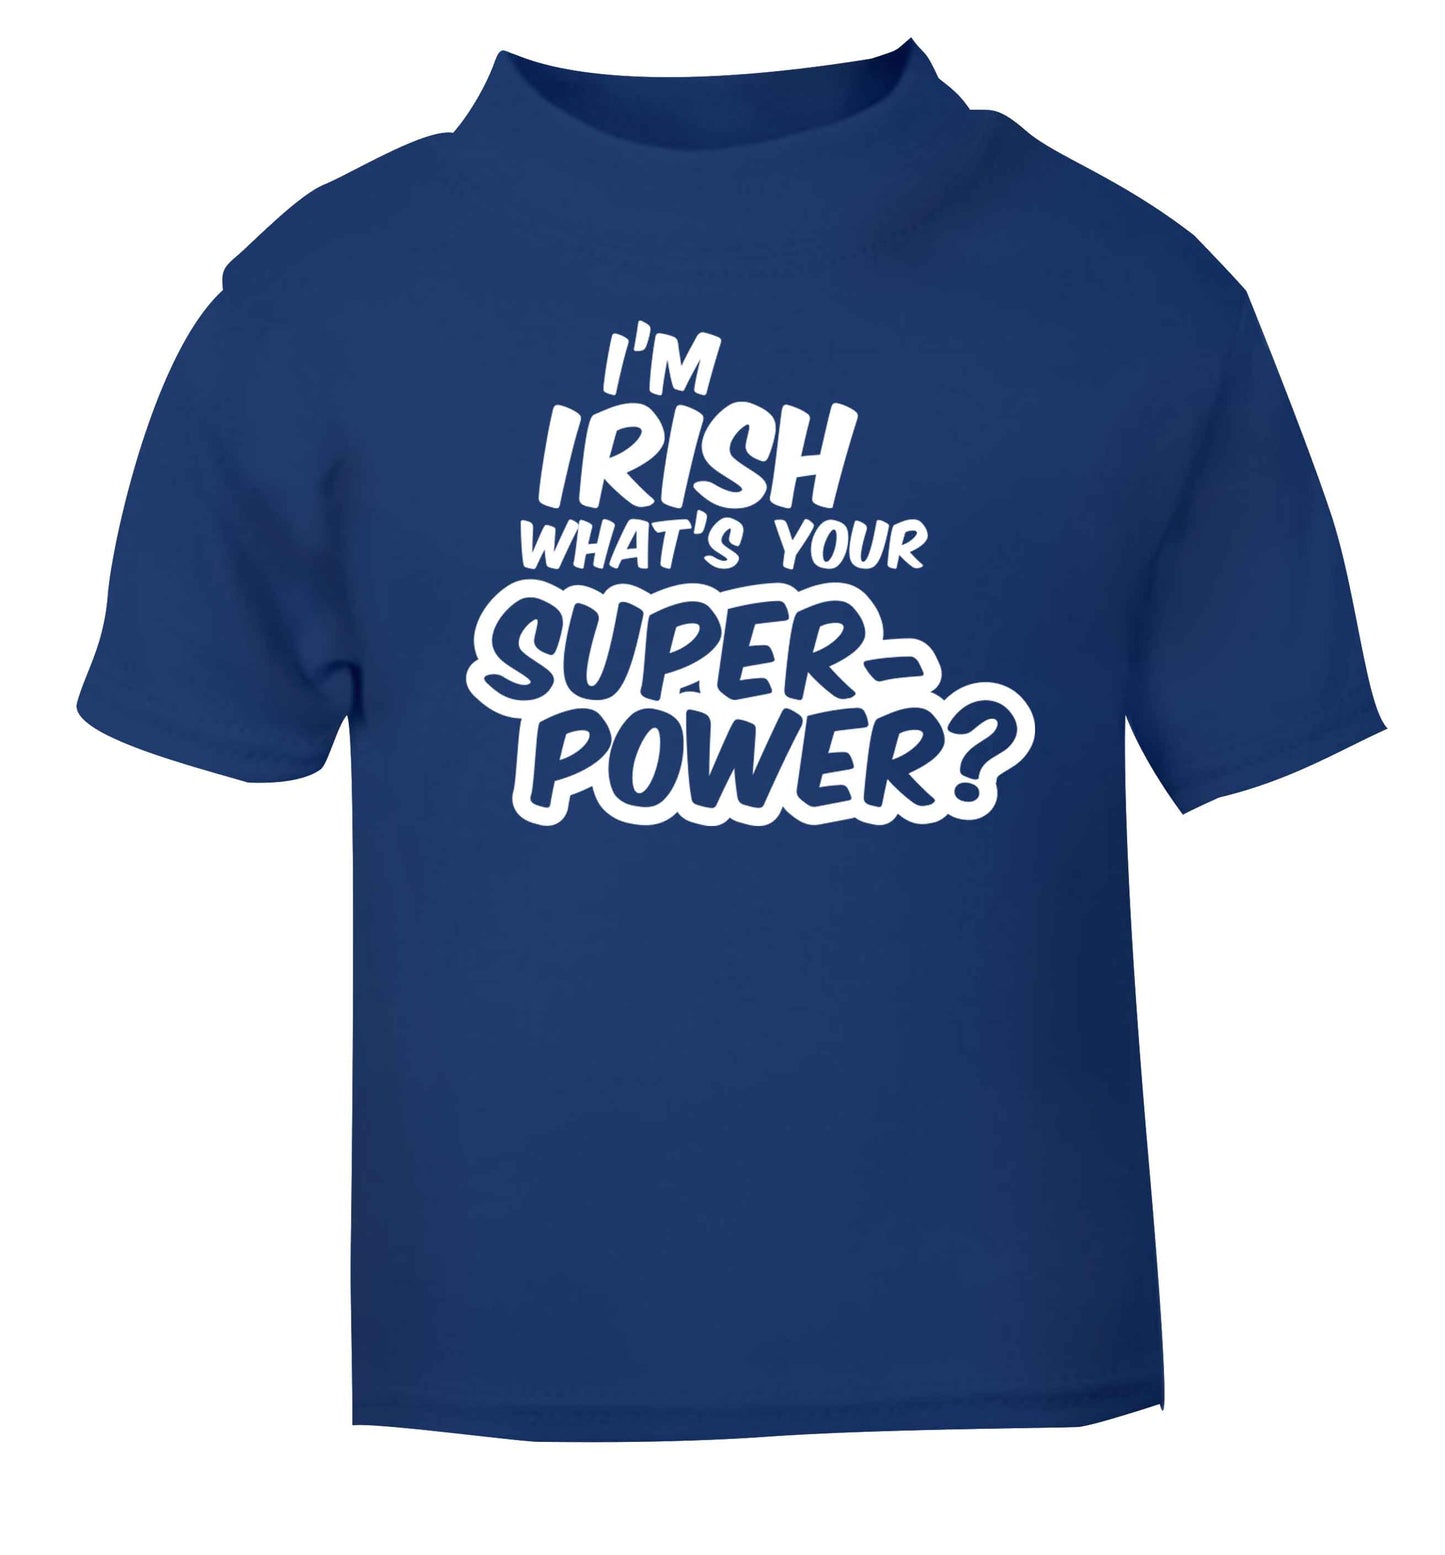 I'm Irish what's your superpower? blue baby toddler Tshirt 2 Years